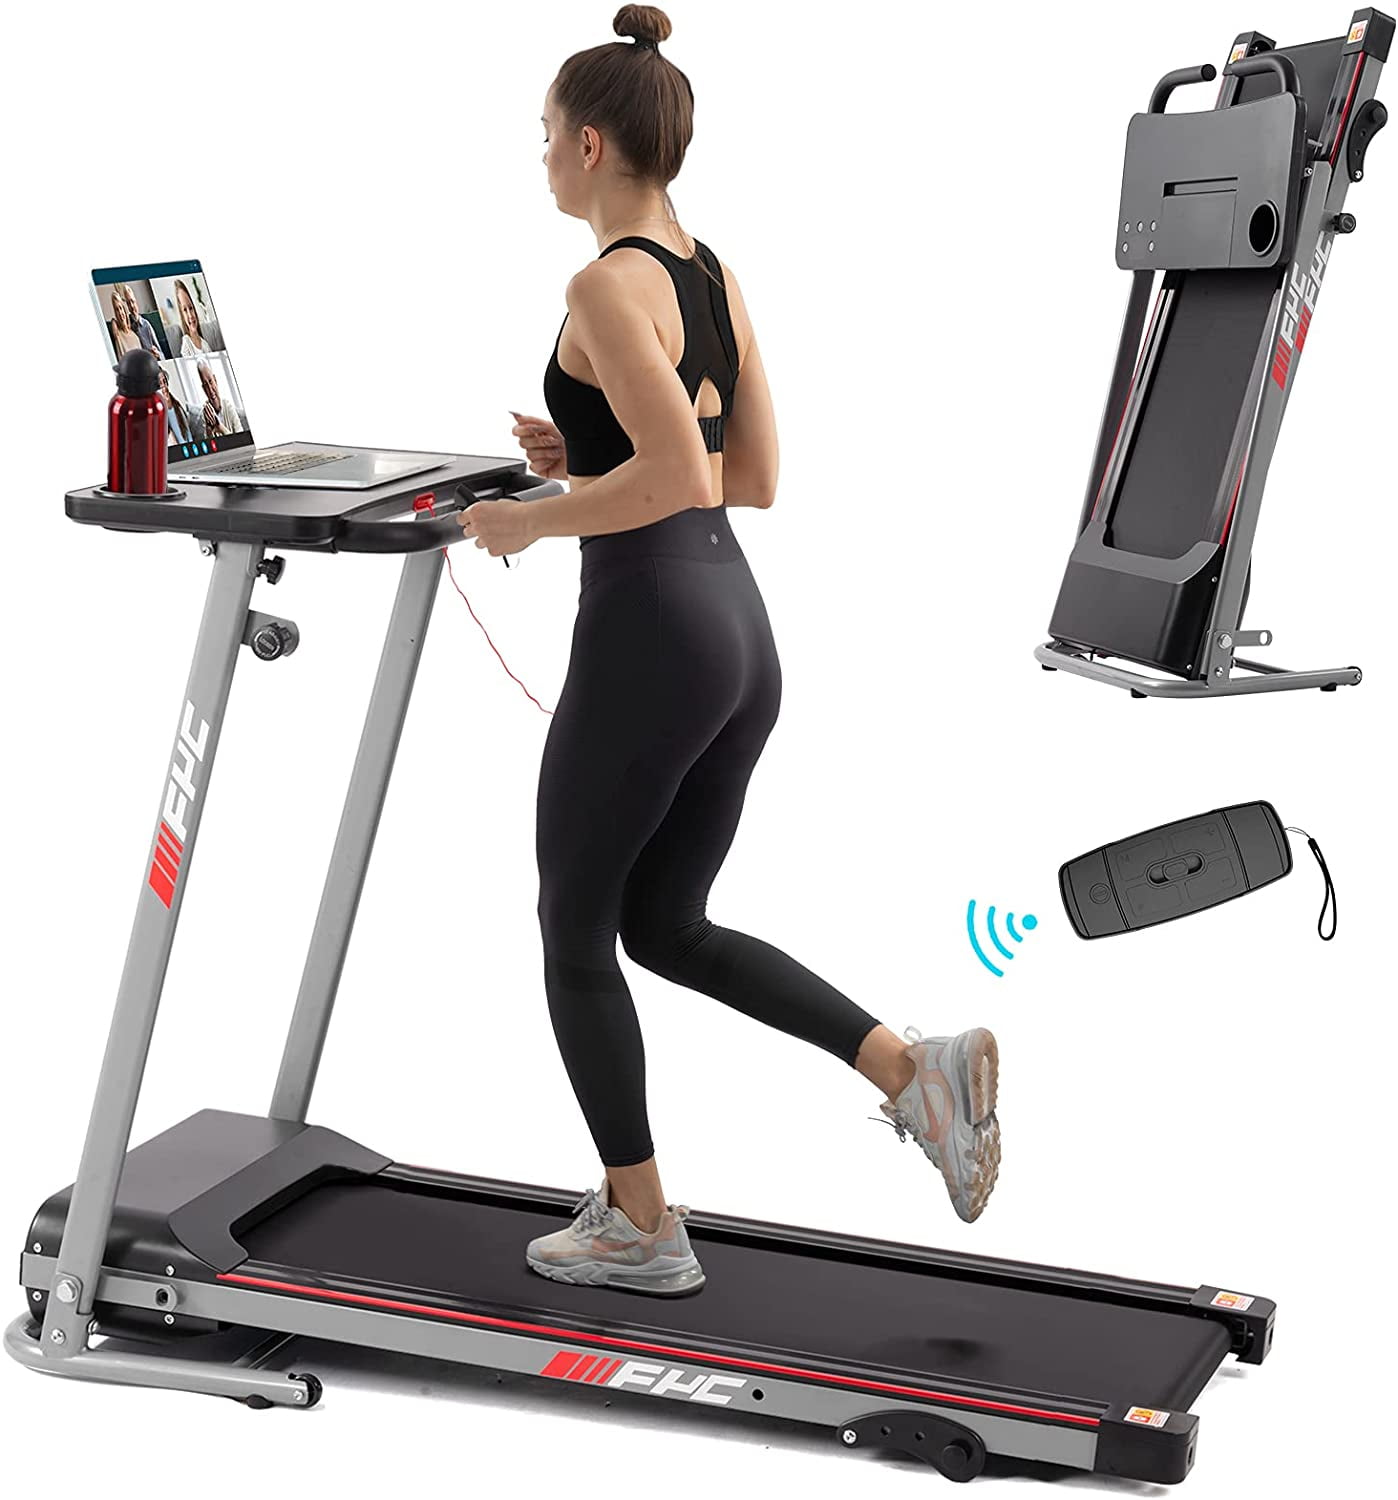 Folding Treadmill Running Jogging Walking Fitness Mechanical Cardio Exercise Gym 